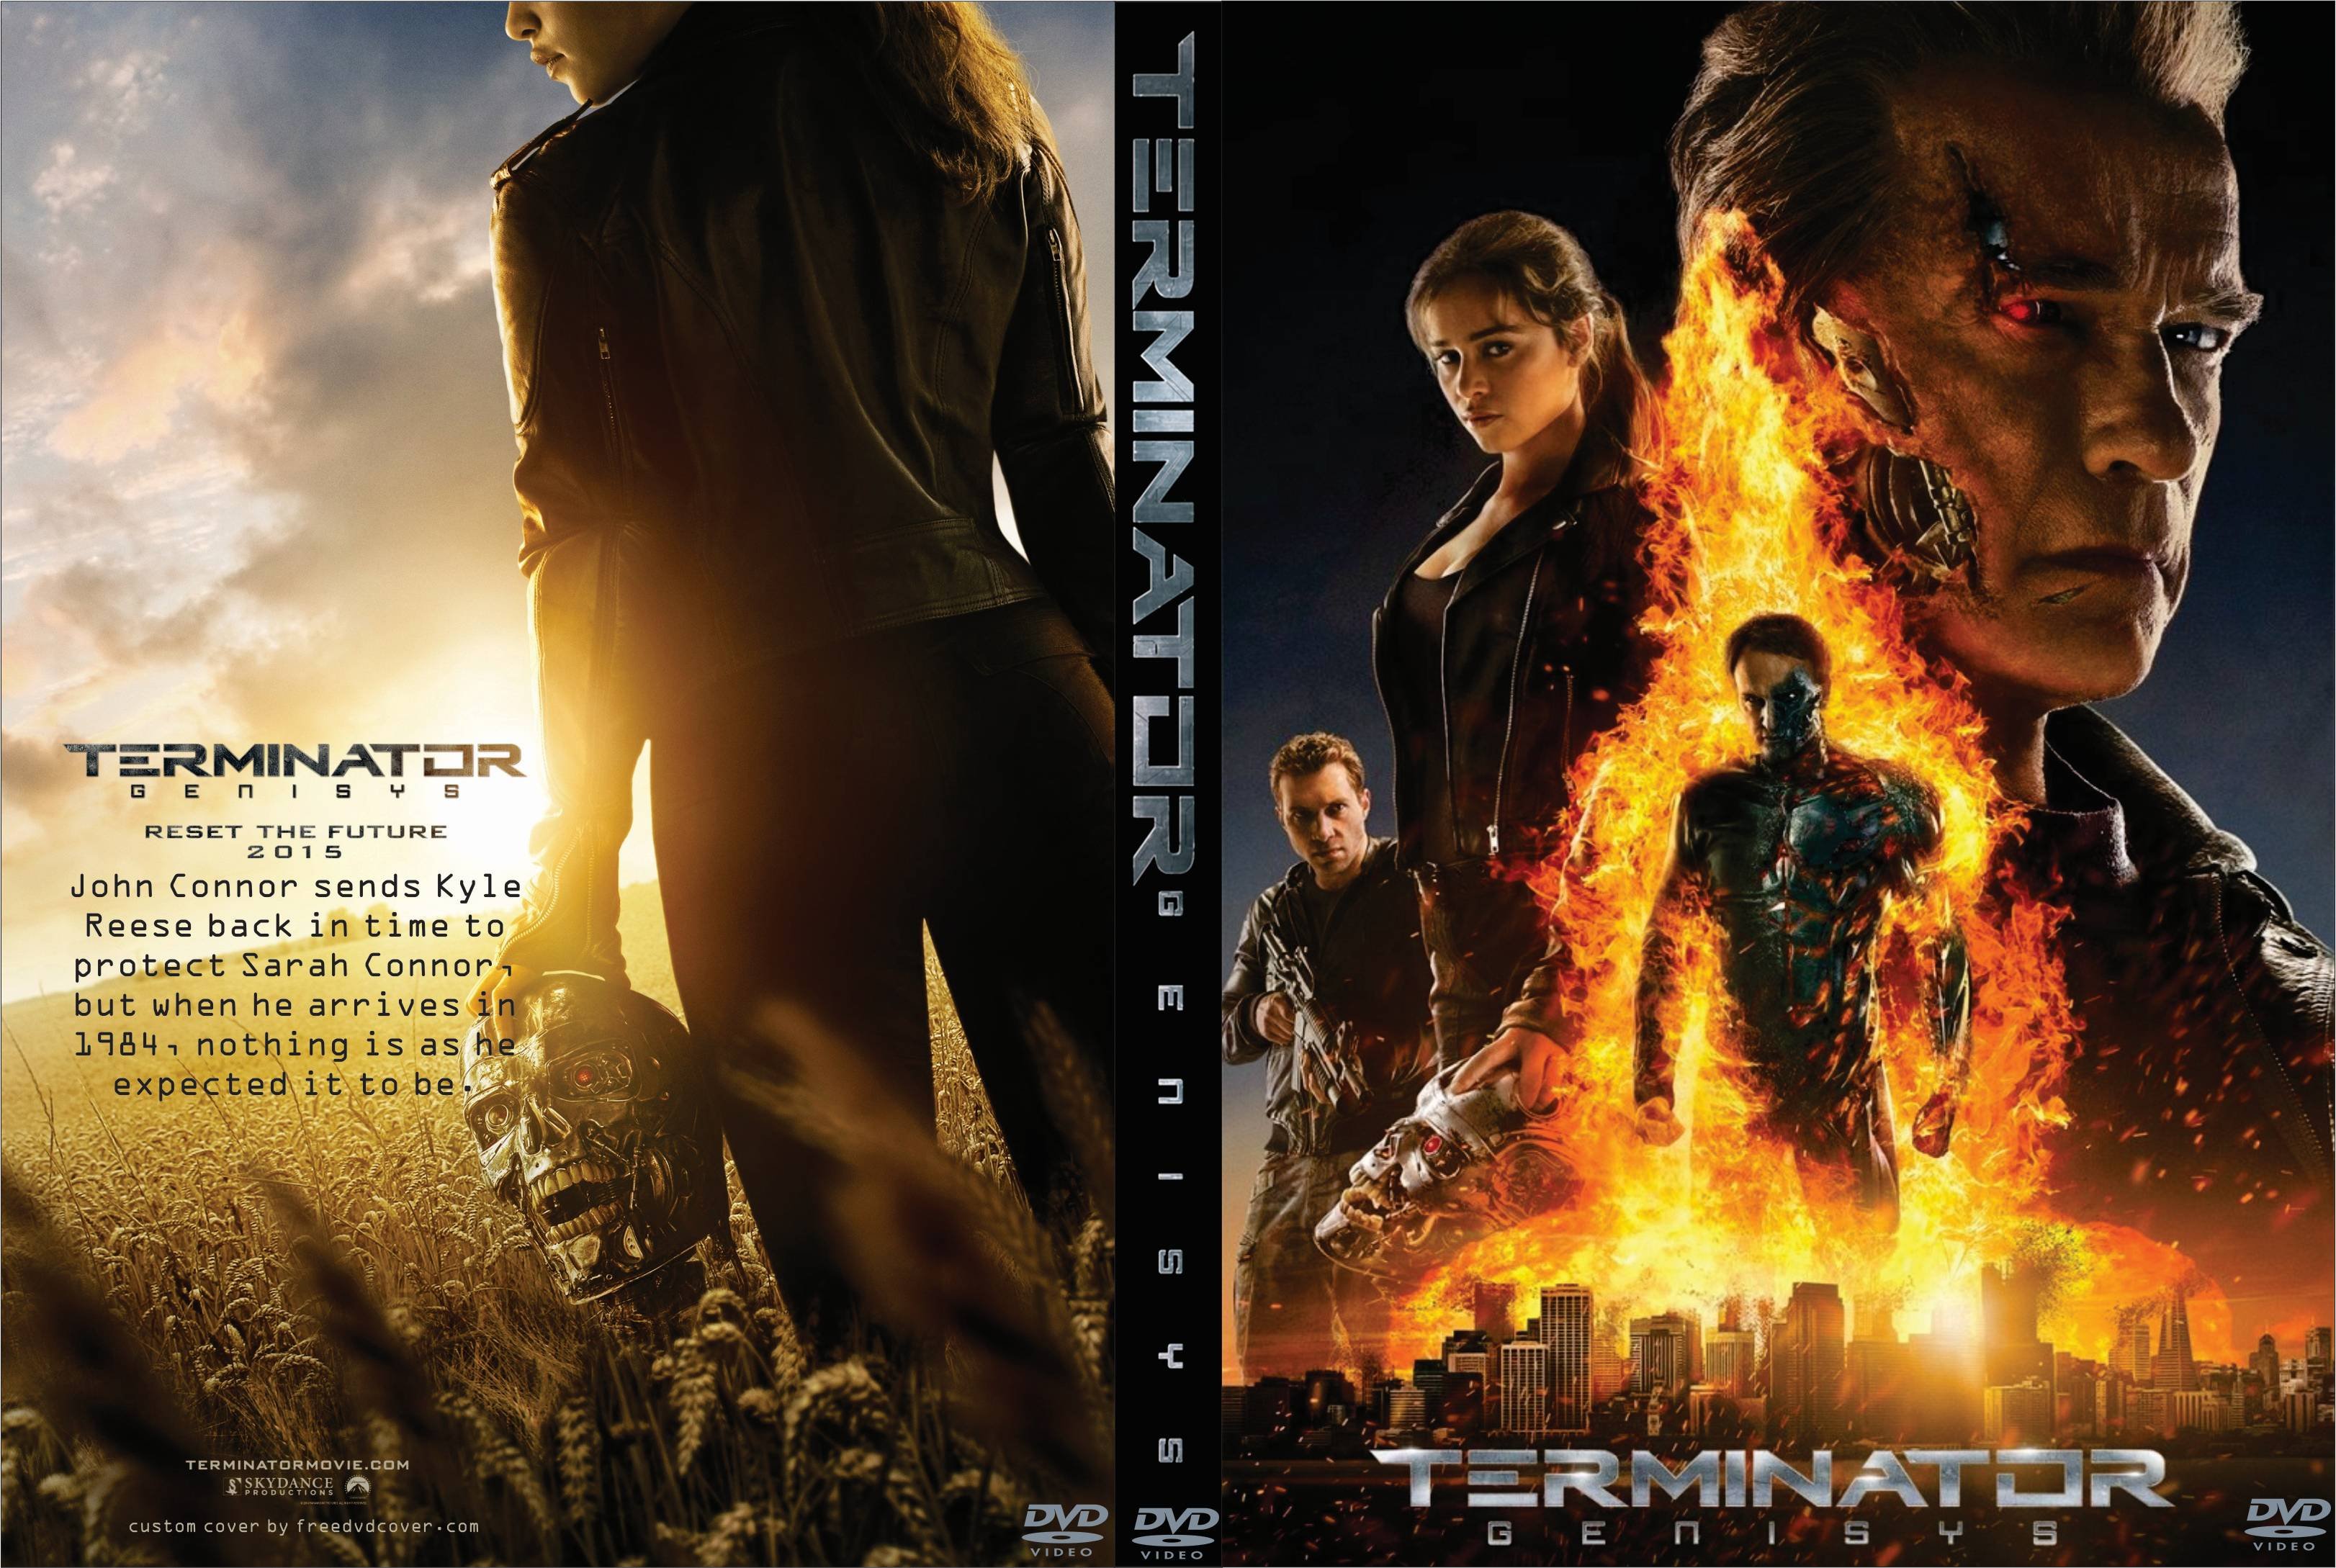 Wifi terminator. Терминатор: Генезис (Blu-ray). Терминатор Генезис Постер. Terminator Genisys 2015 DVD Cover. Терминатор Постер к фильму.